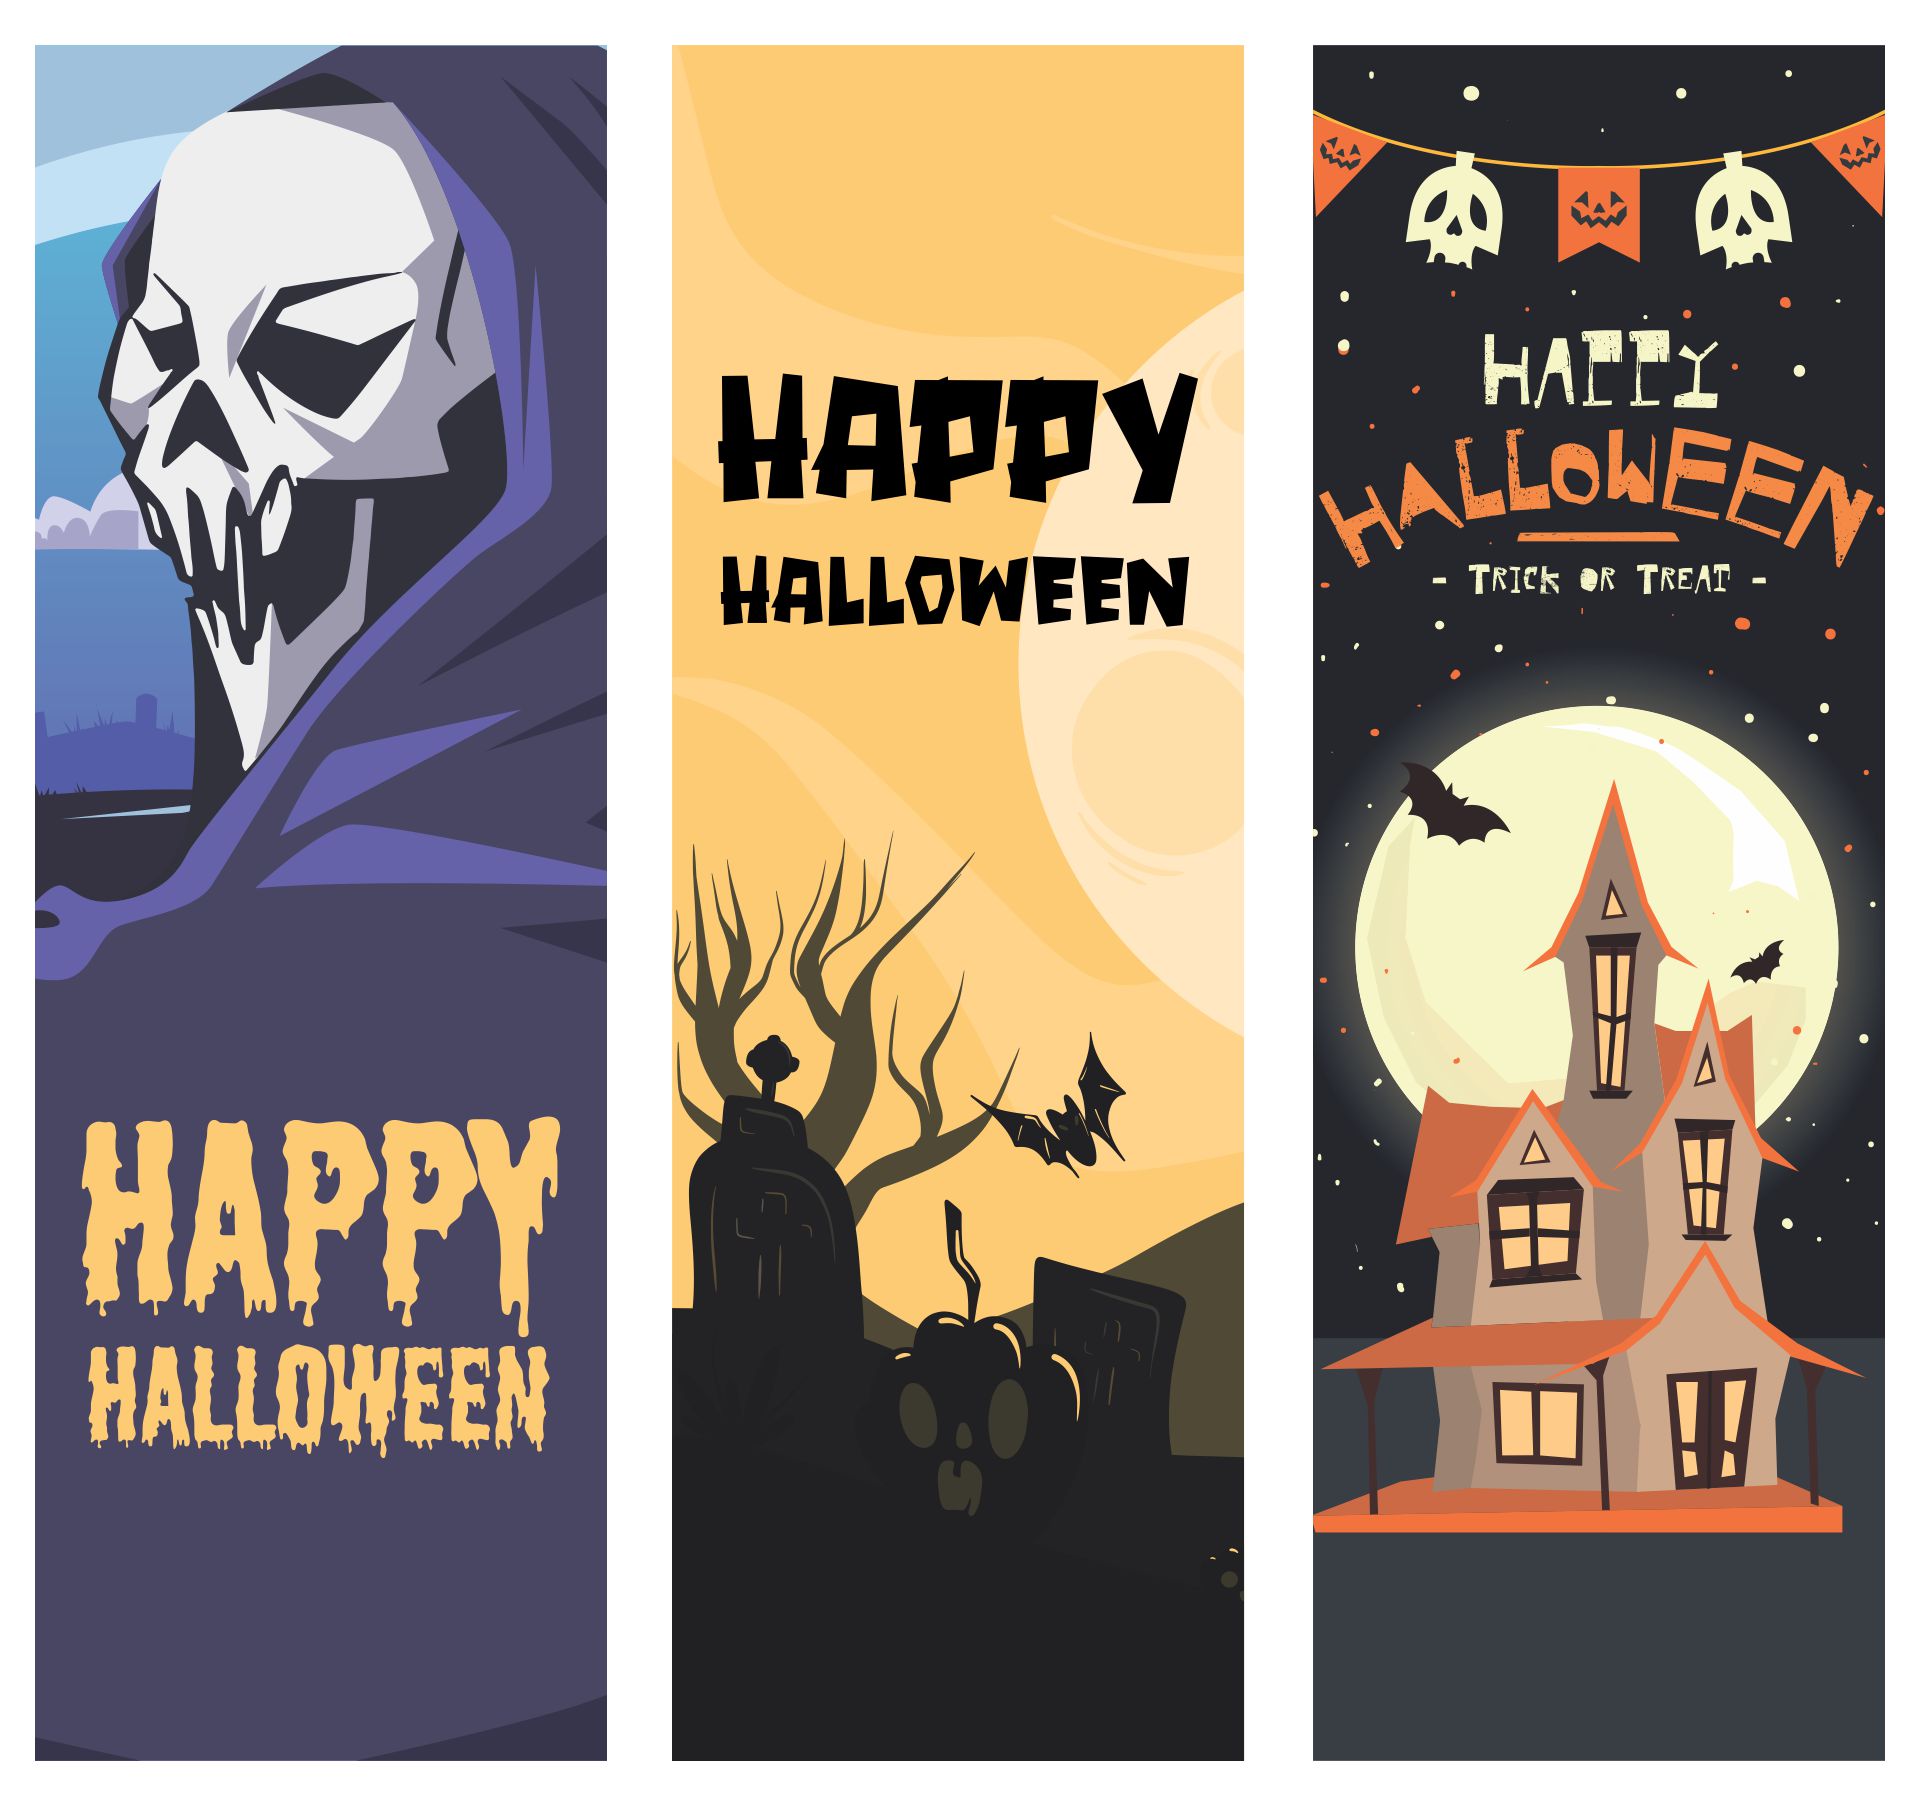 Printable Halloween Bookmarks